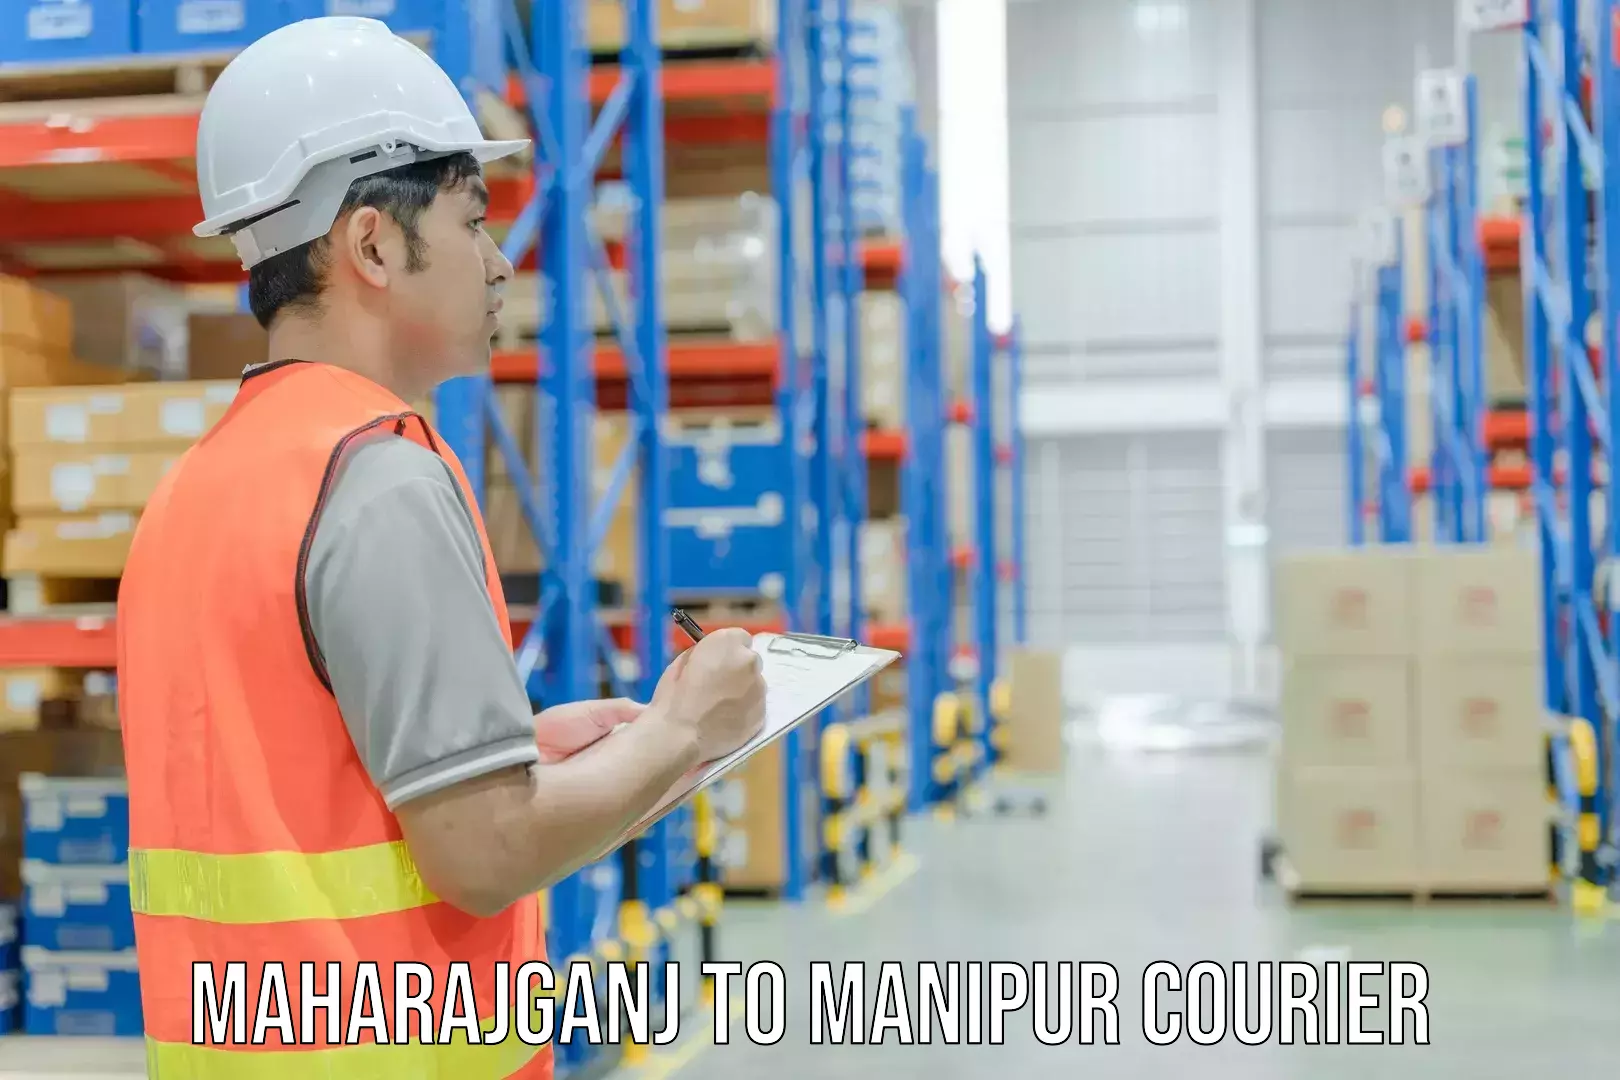 Courier service comparison Maharajganj to Imphal